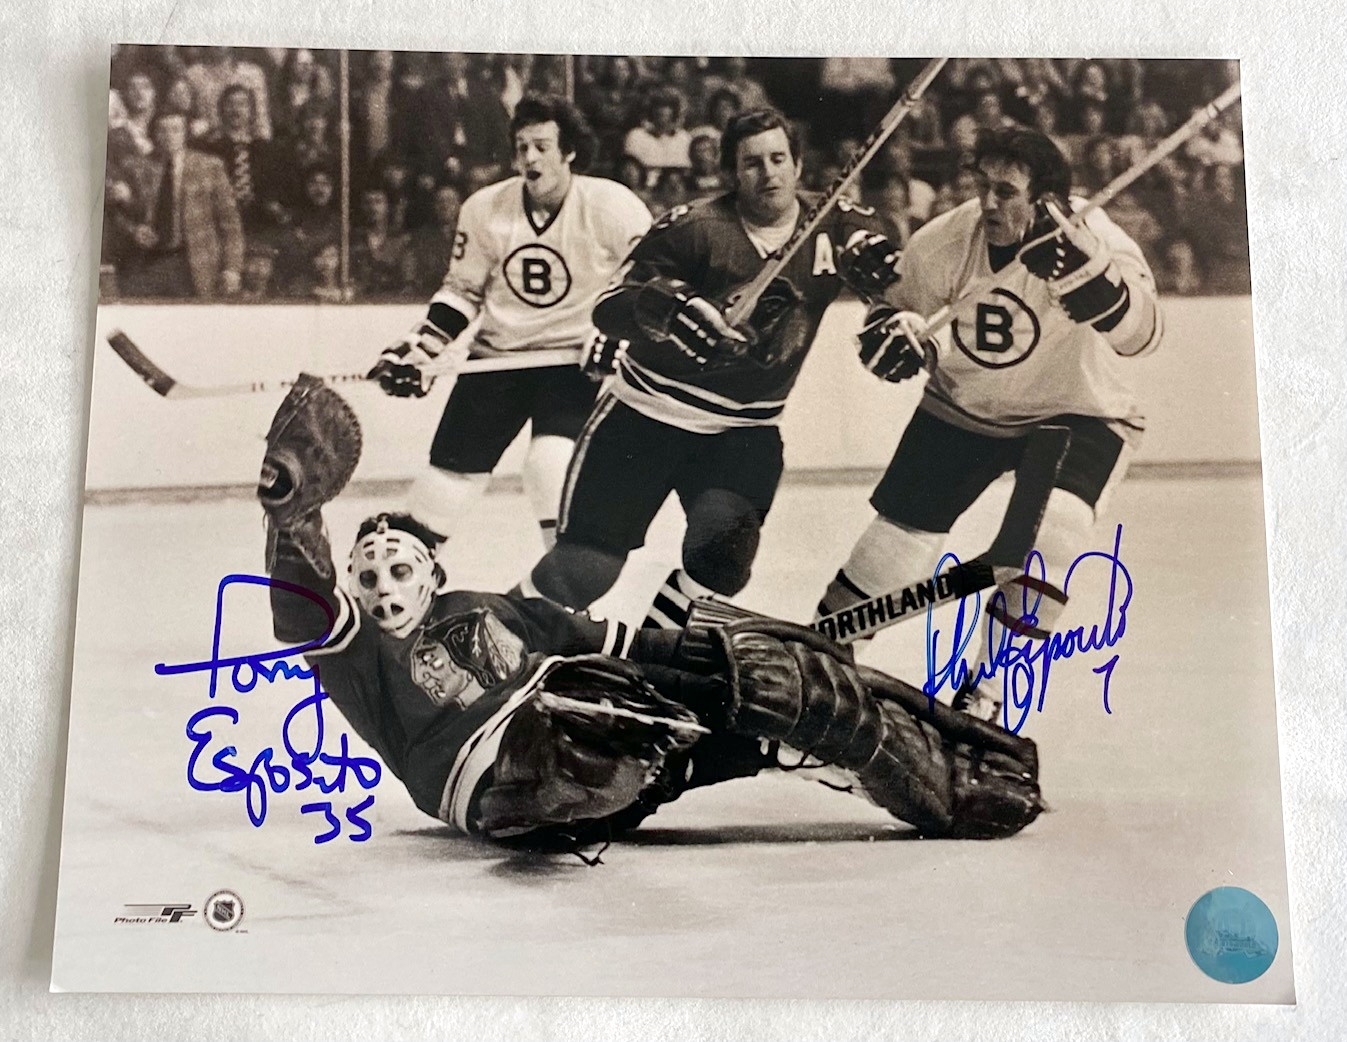 Tony & Phil Esposito Blackhawks vs Bruins Dual Signed 8x10 Photo with HOF Notes